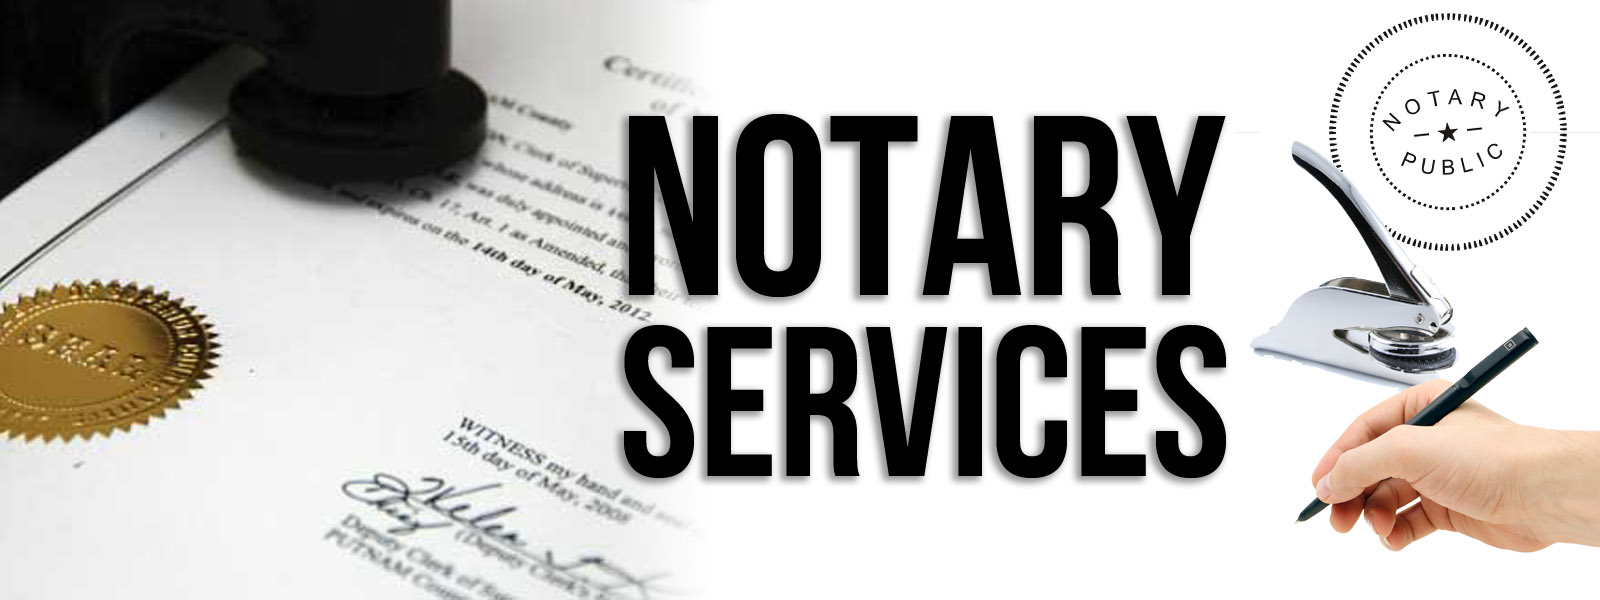 notarization 如果是委托书,声明书一类首先要由当地公证员(notary